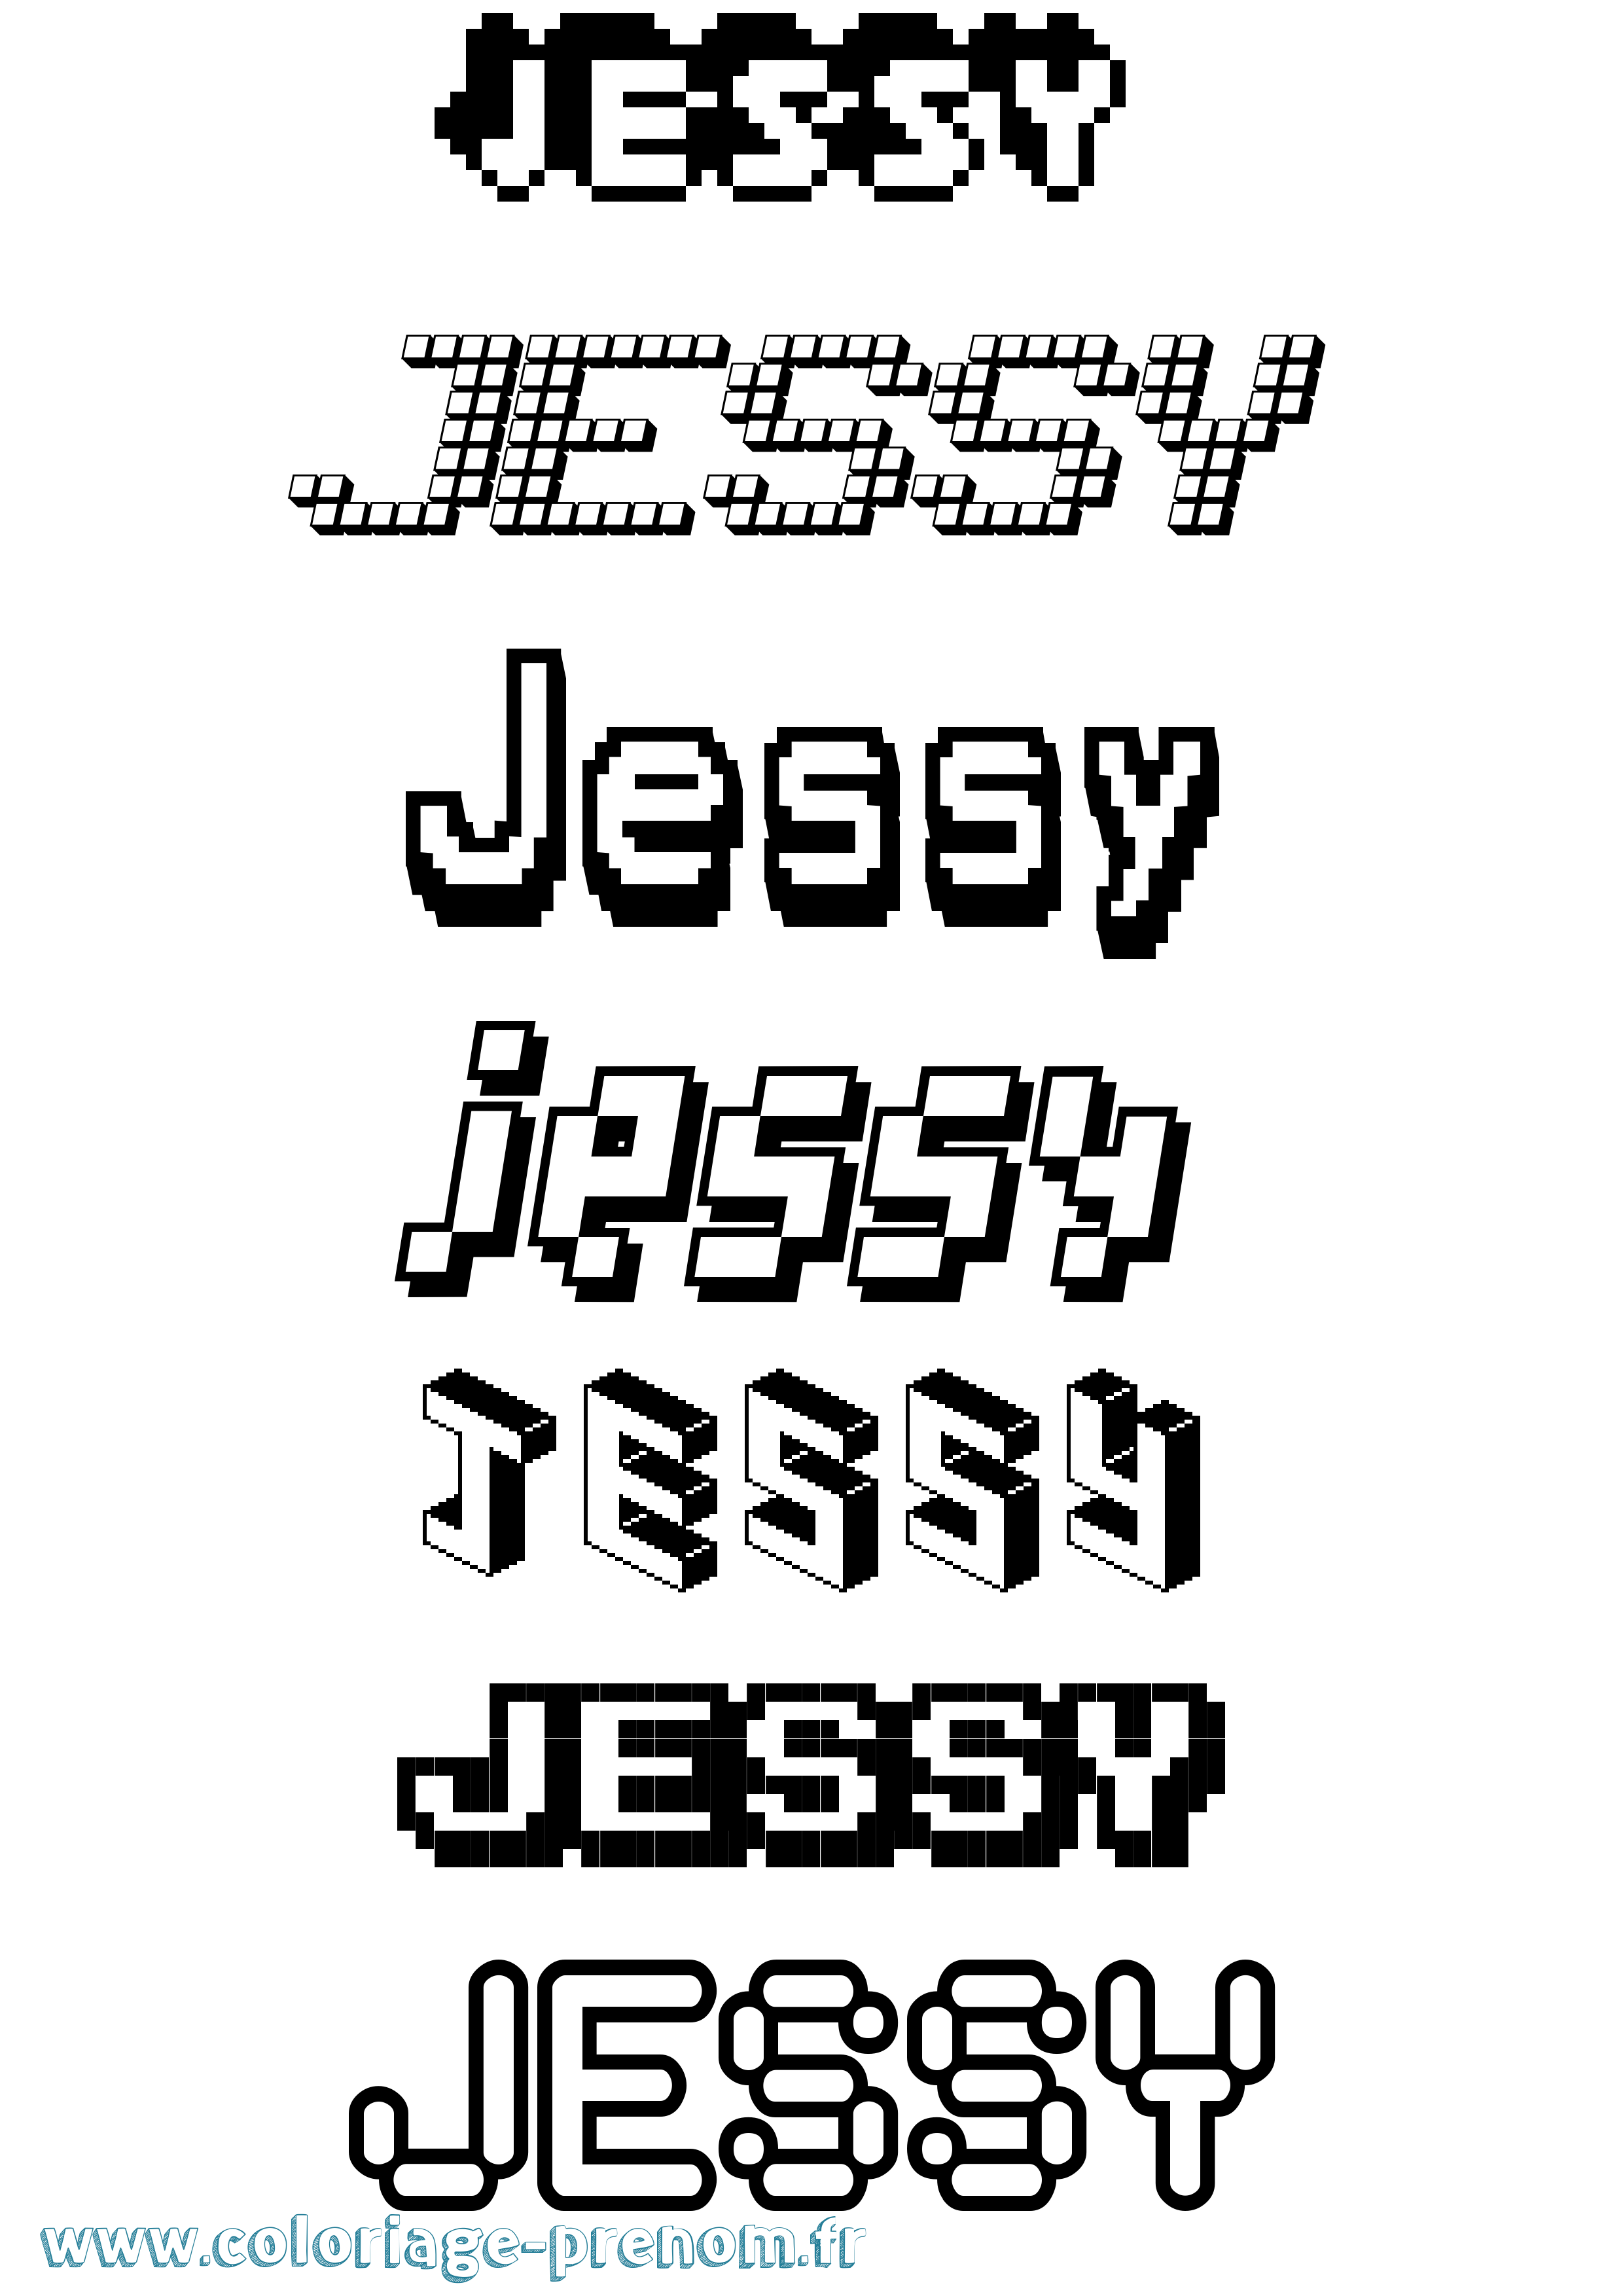 Coloriage prénom Jessy Pixel